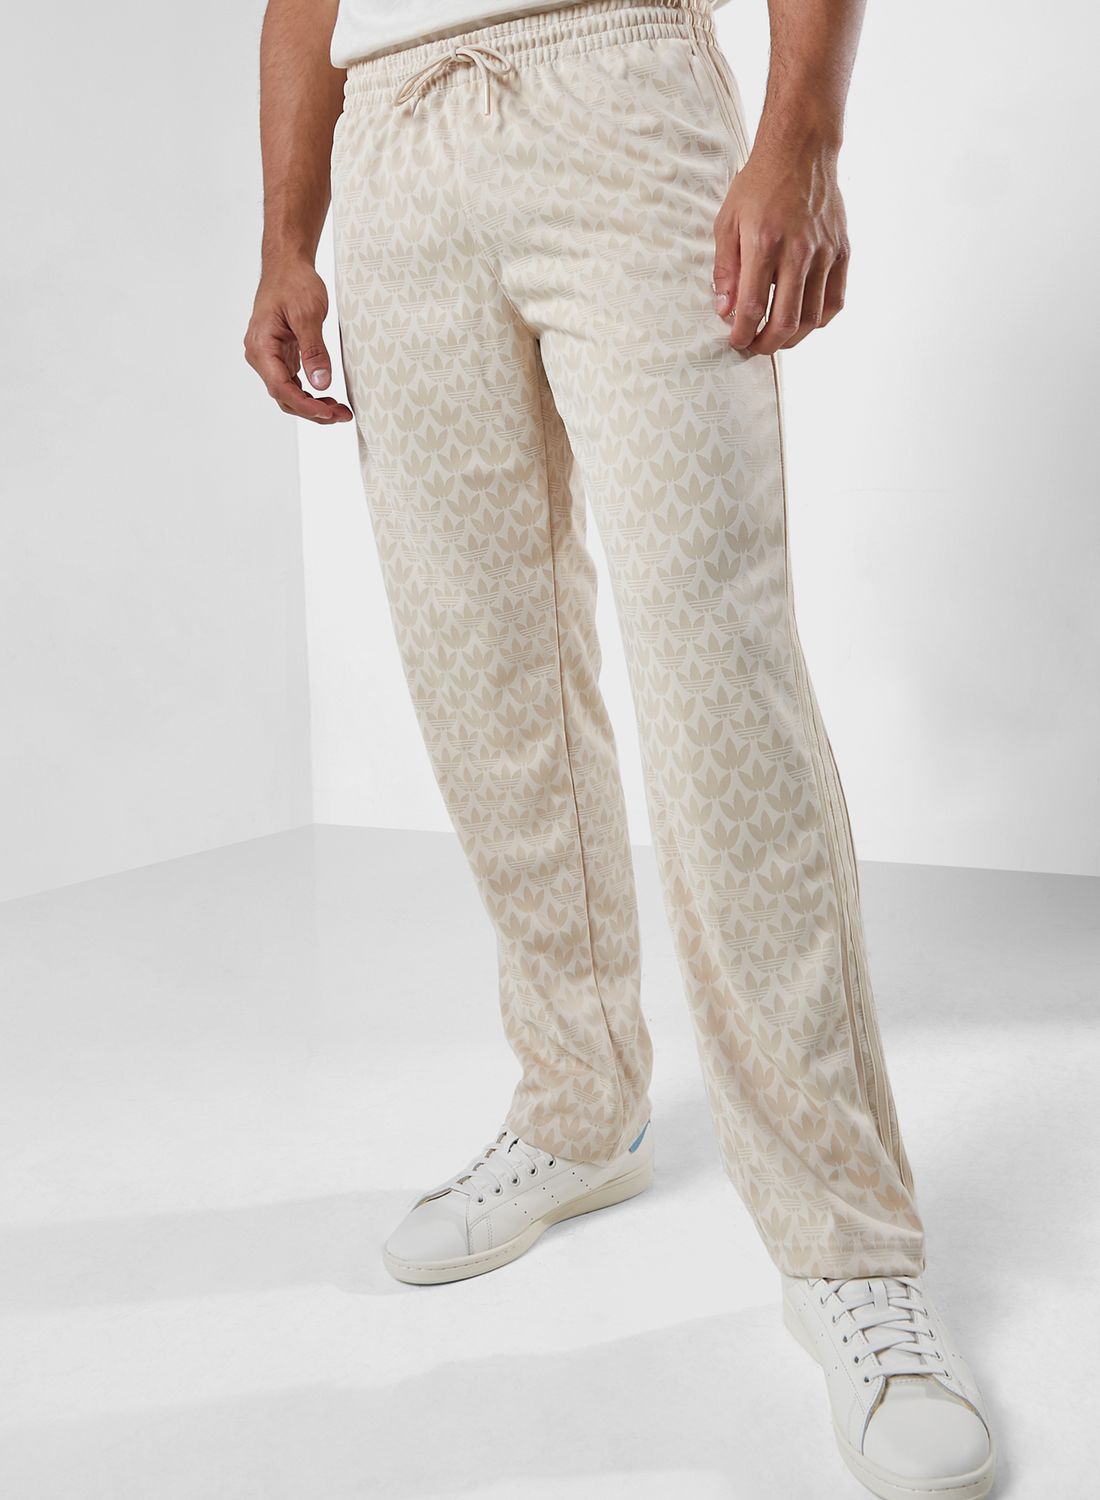 adidas Originals Men's Graphics Monogram Pajama Pants